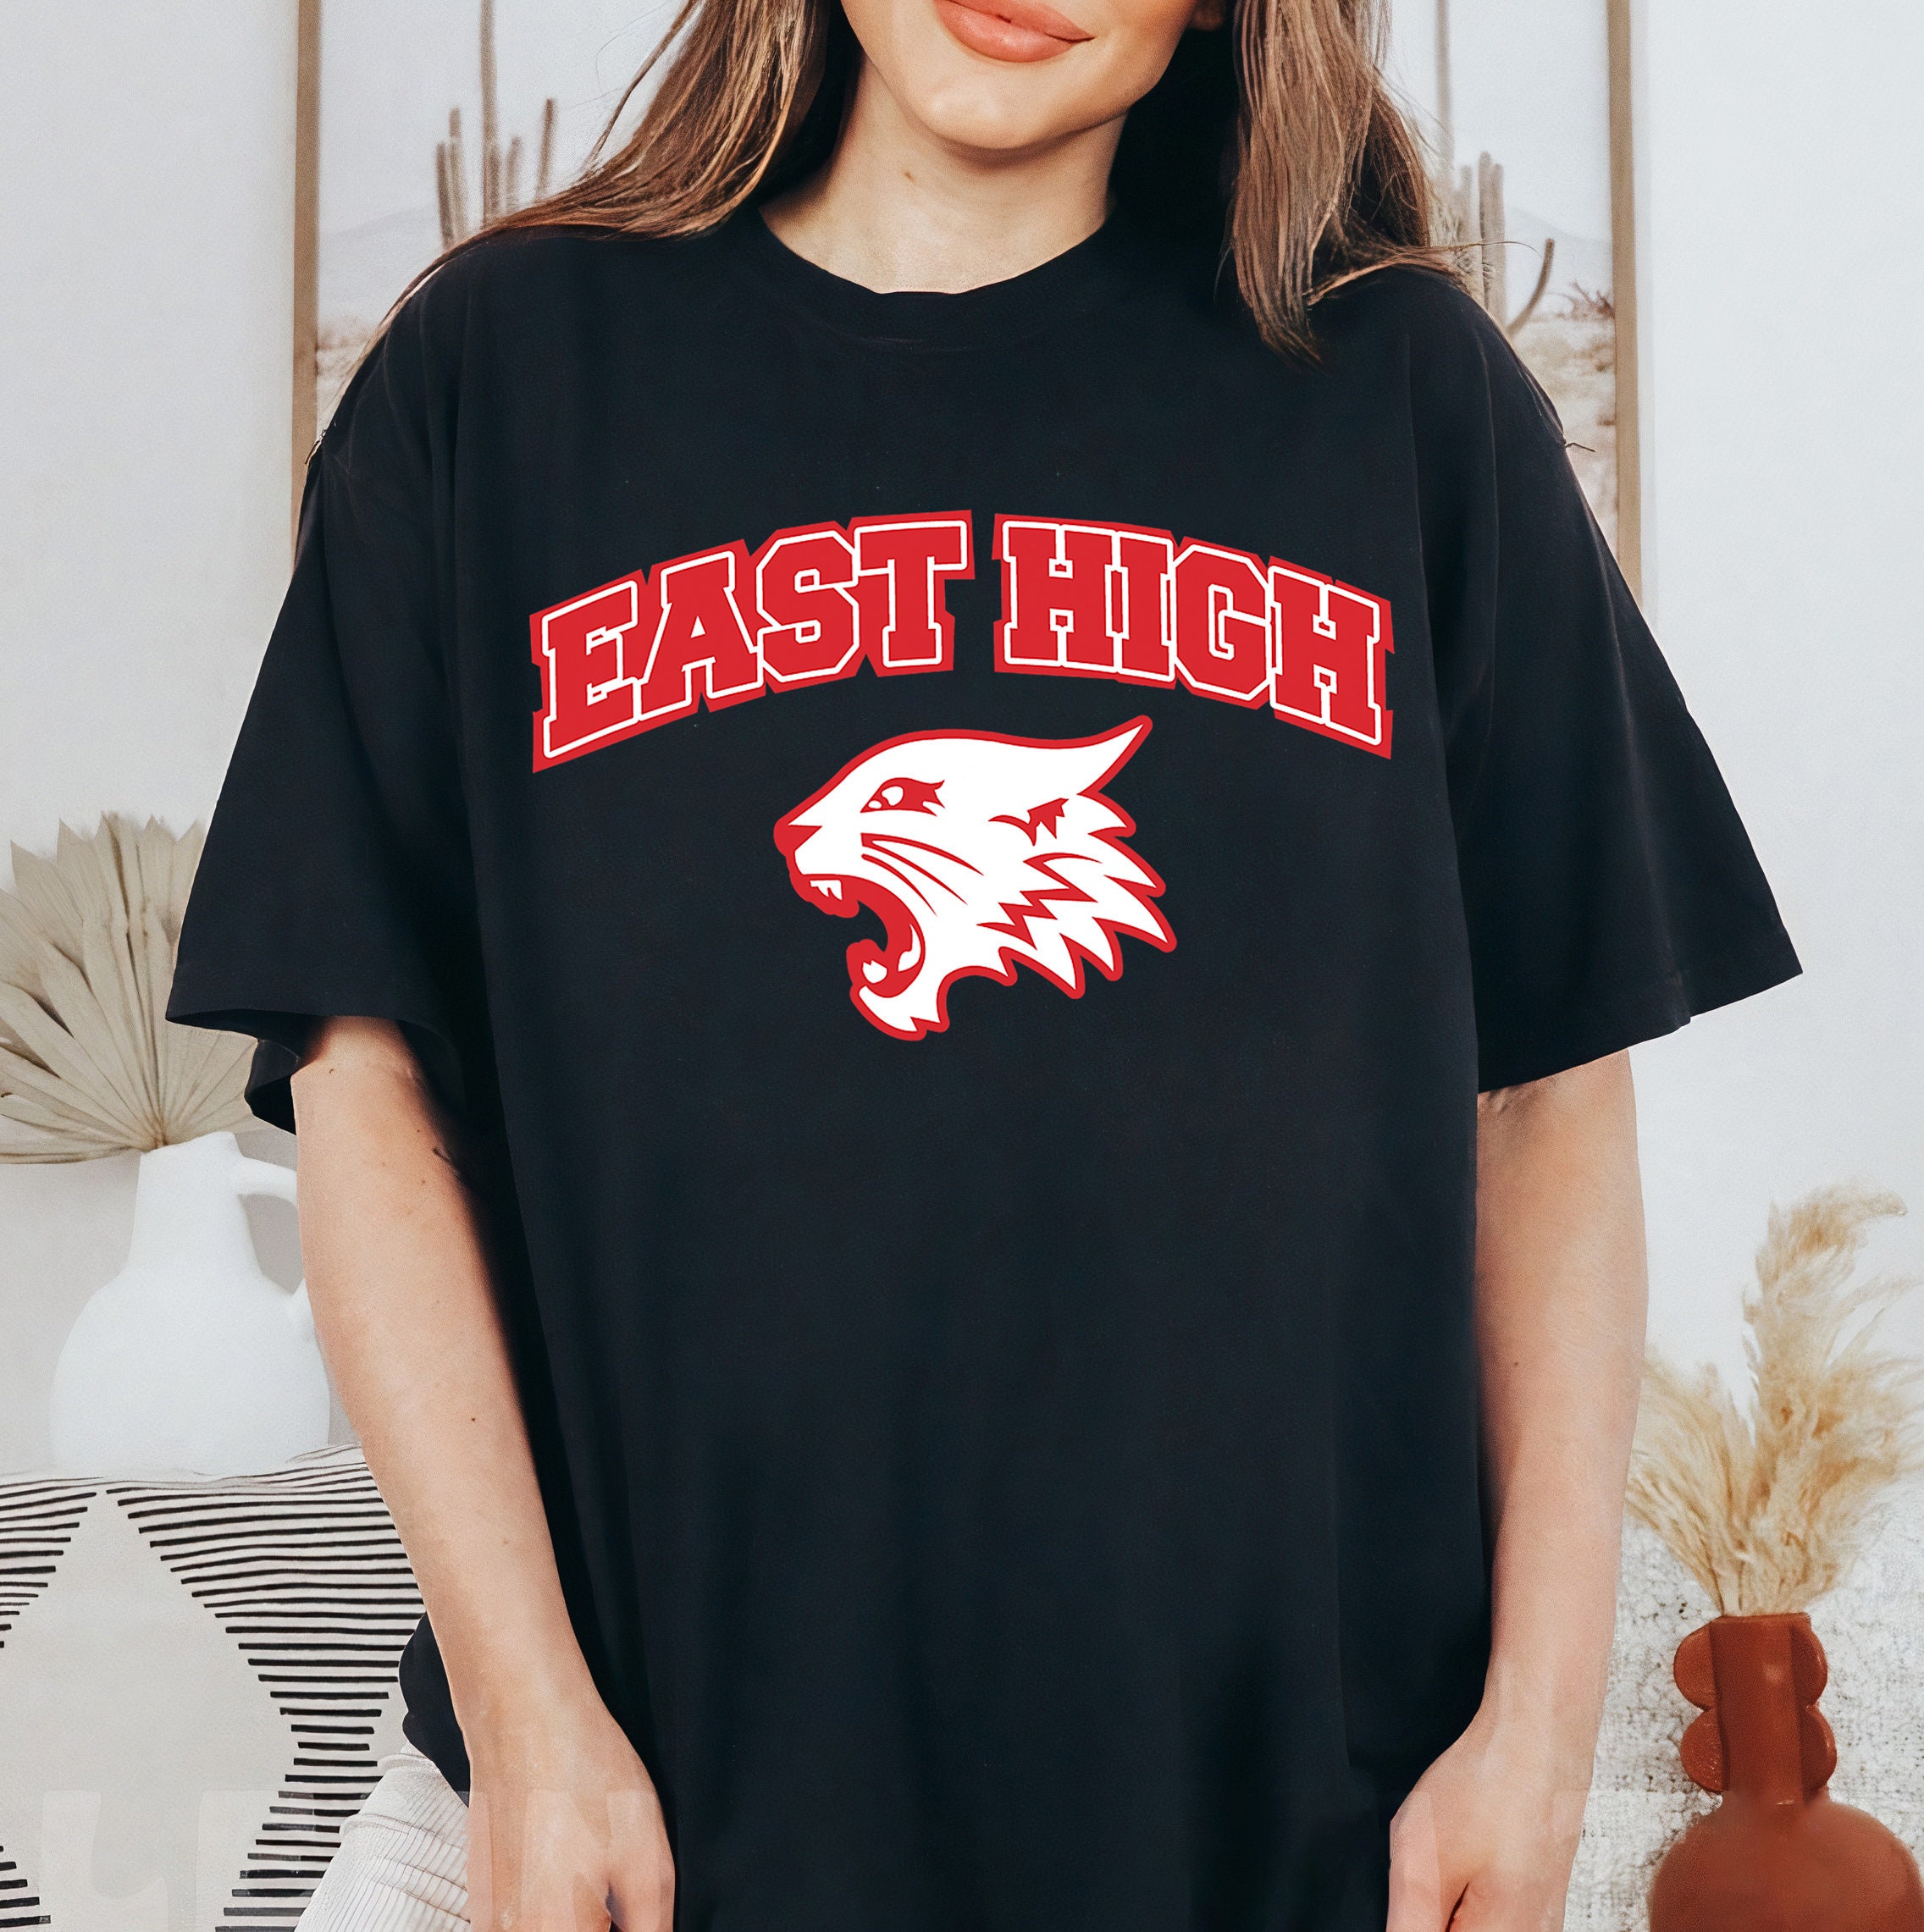 Wildcat Tshirt High School Musical 